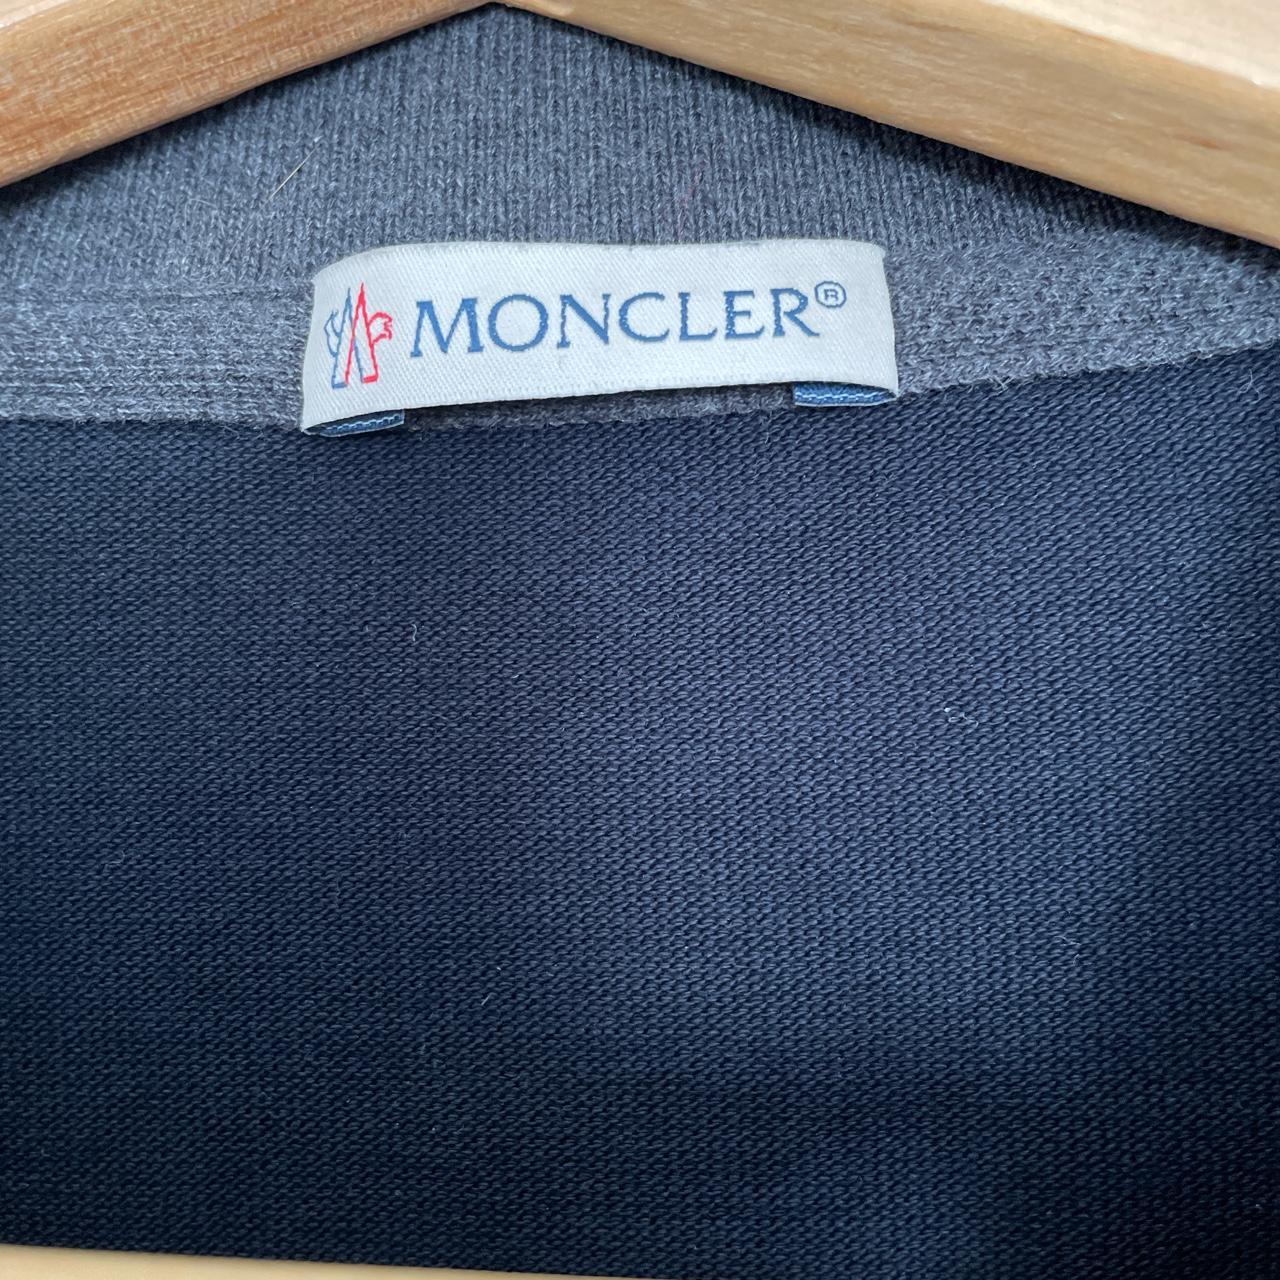 Moncler Polo Shirt in Navy/Grey Size XL #Moncler... - Depop